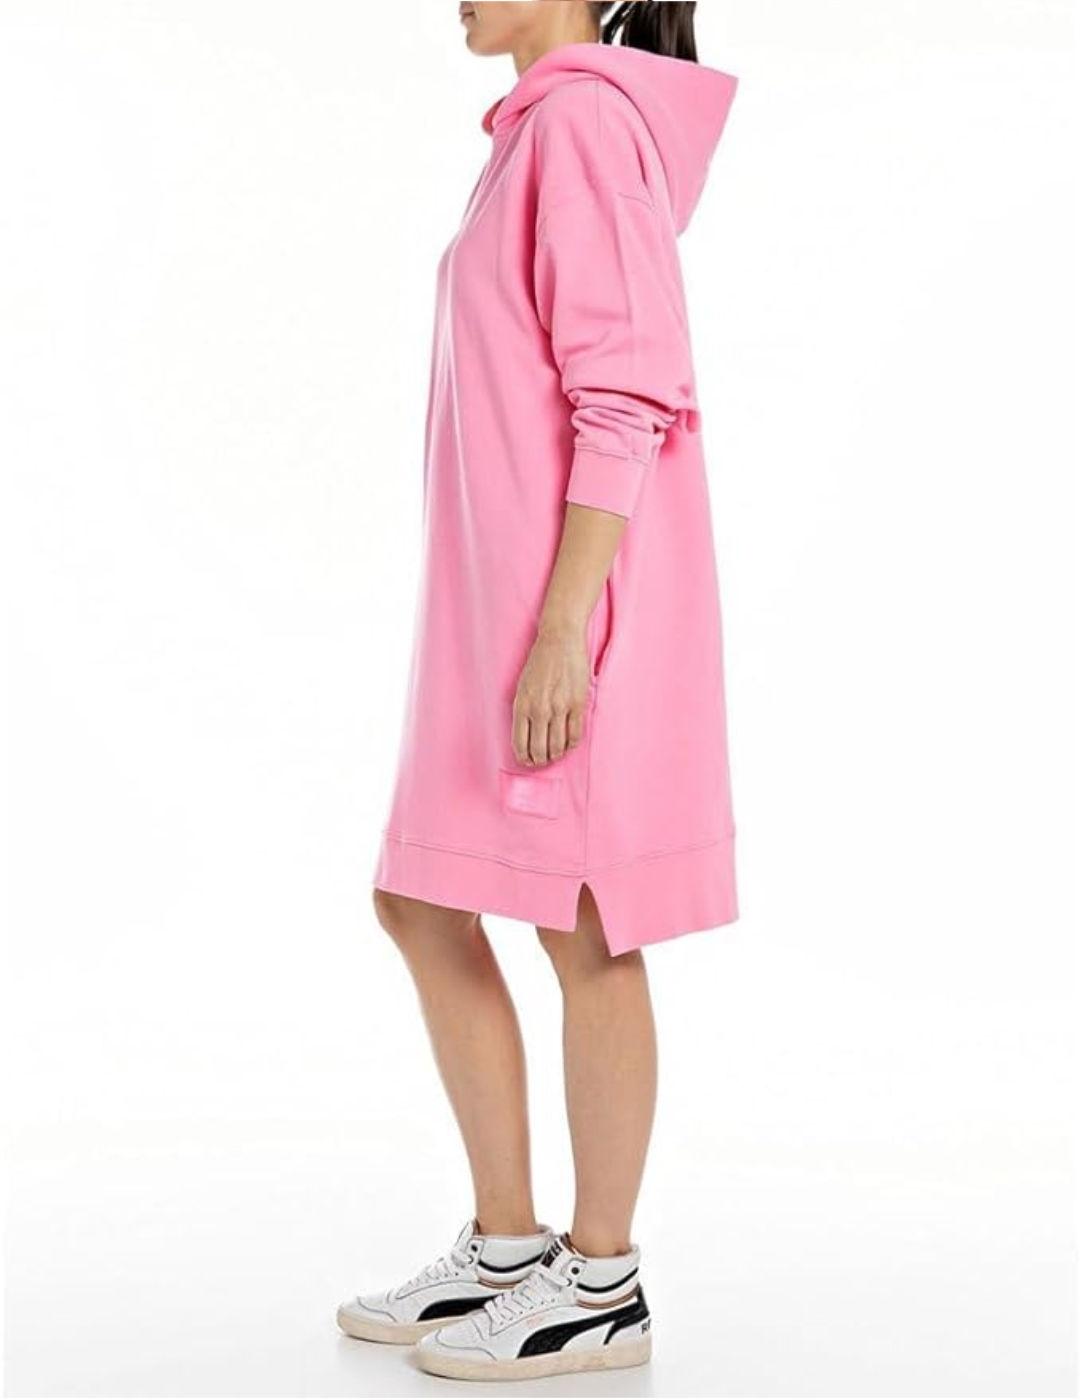 Vestido sudadera Replay rosa con capucha oversize para mujer